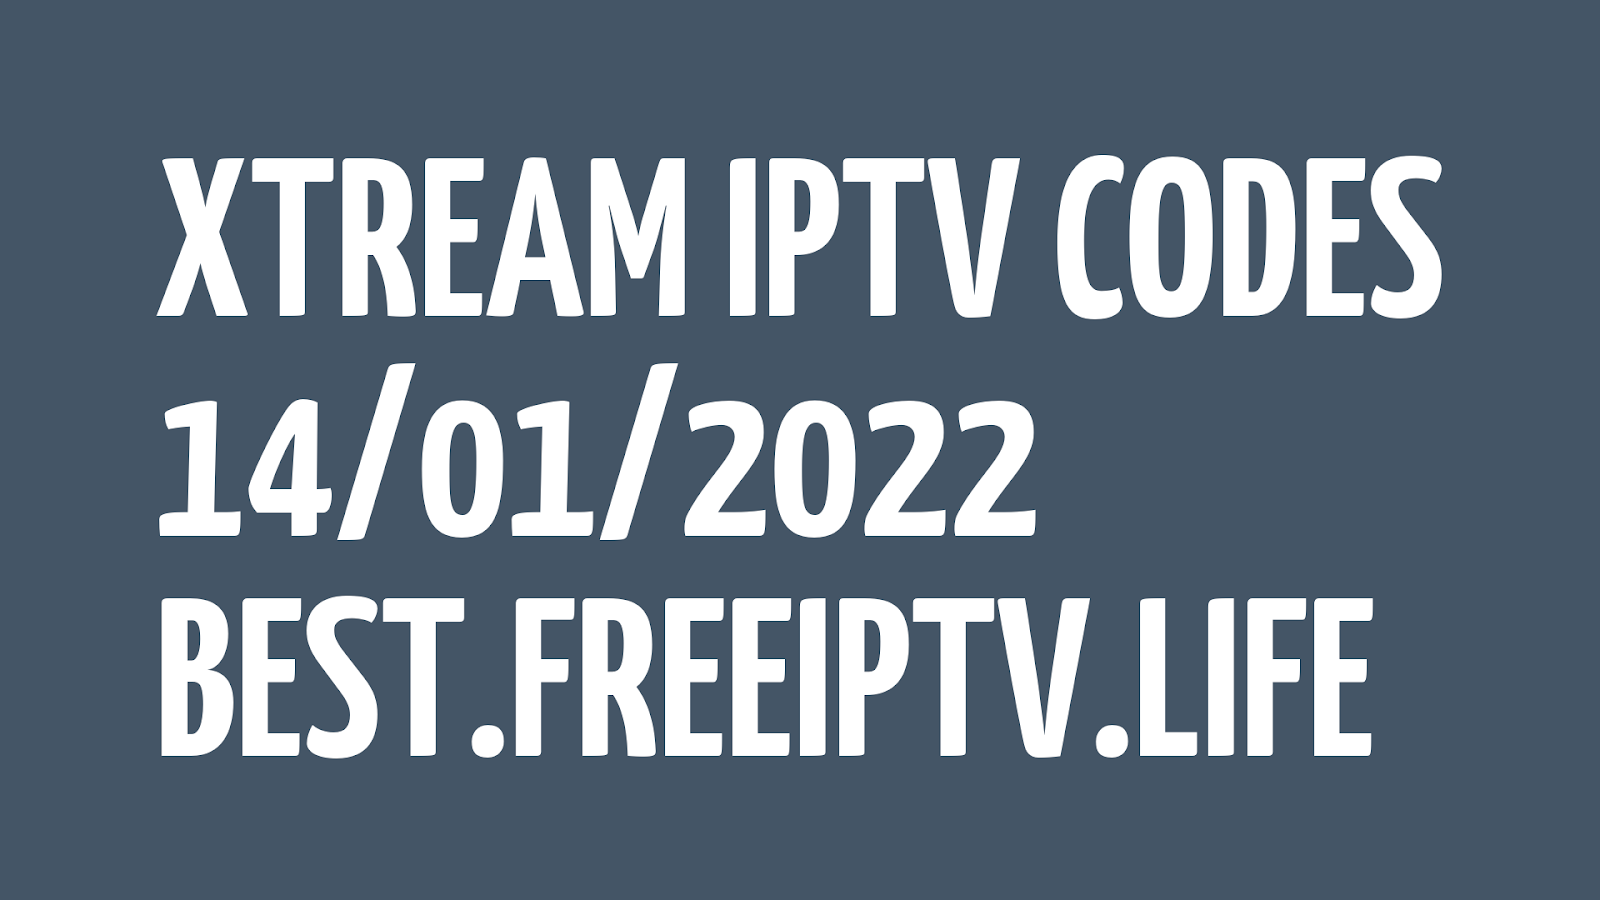 +100 XTREAM CODES IPTV STB EMU STALKER PORTAL MAC 14/01/2022